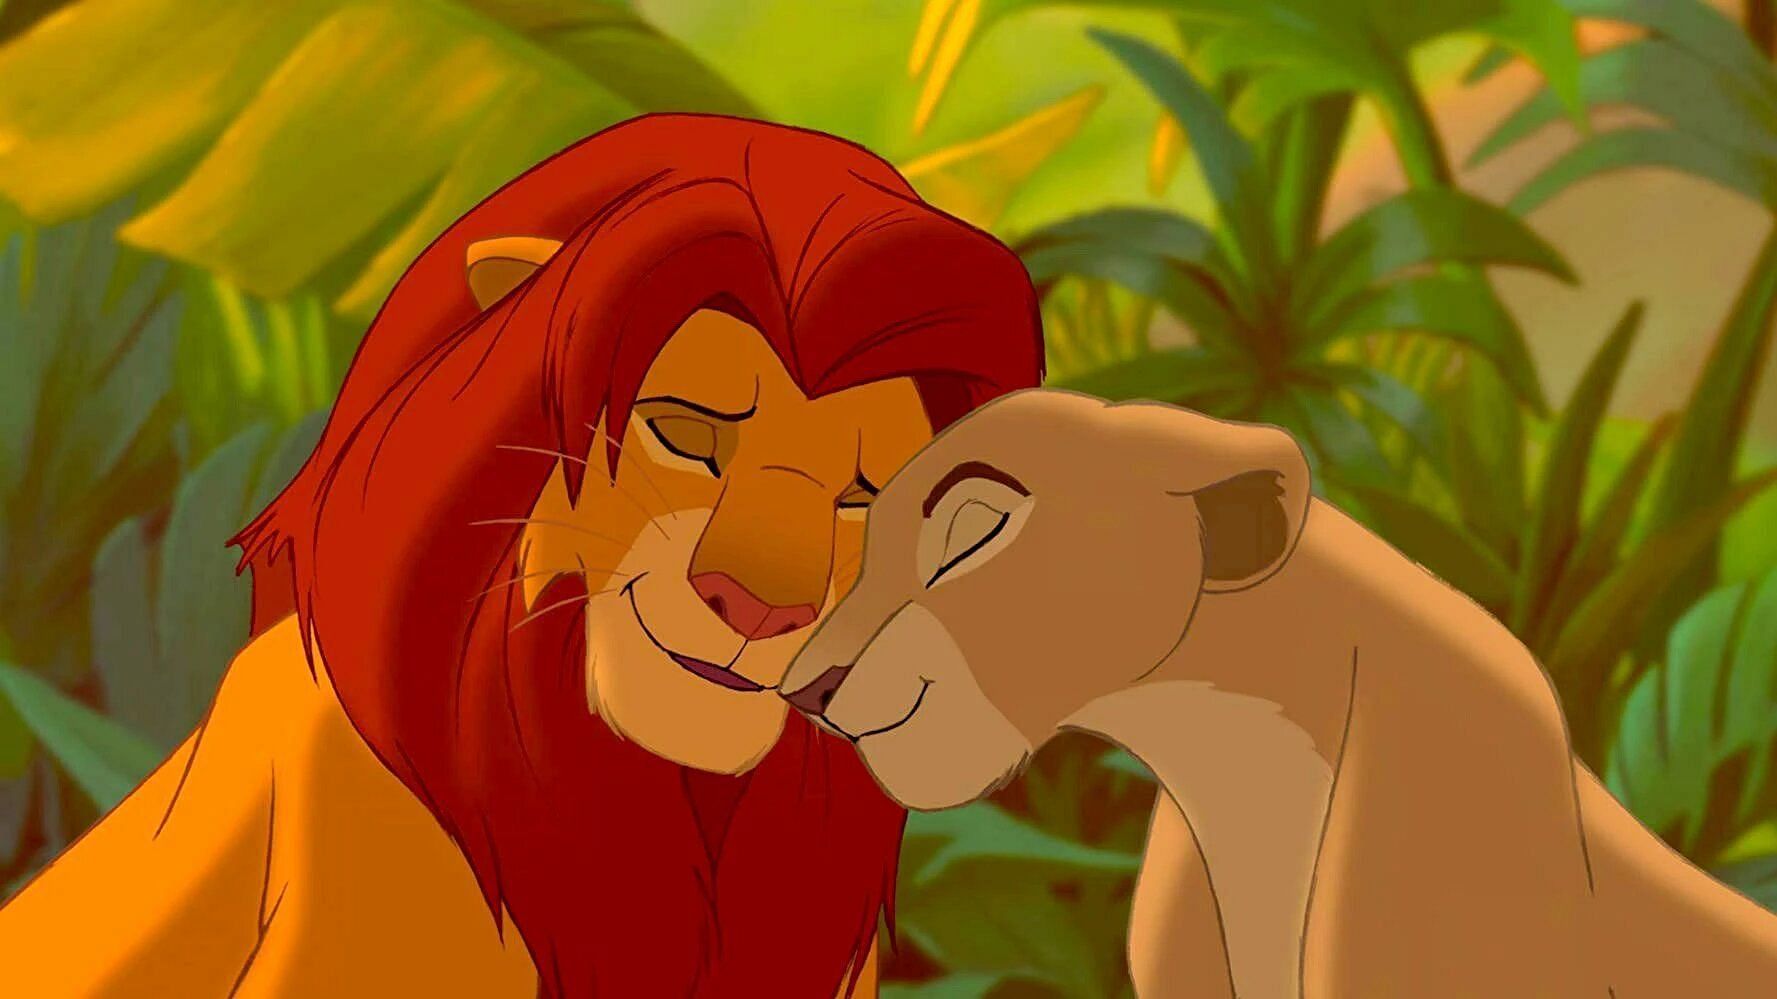 Simba and Nala in the 1994 Lion King movie (Image via Disney).